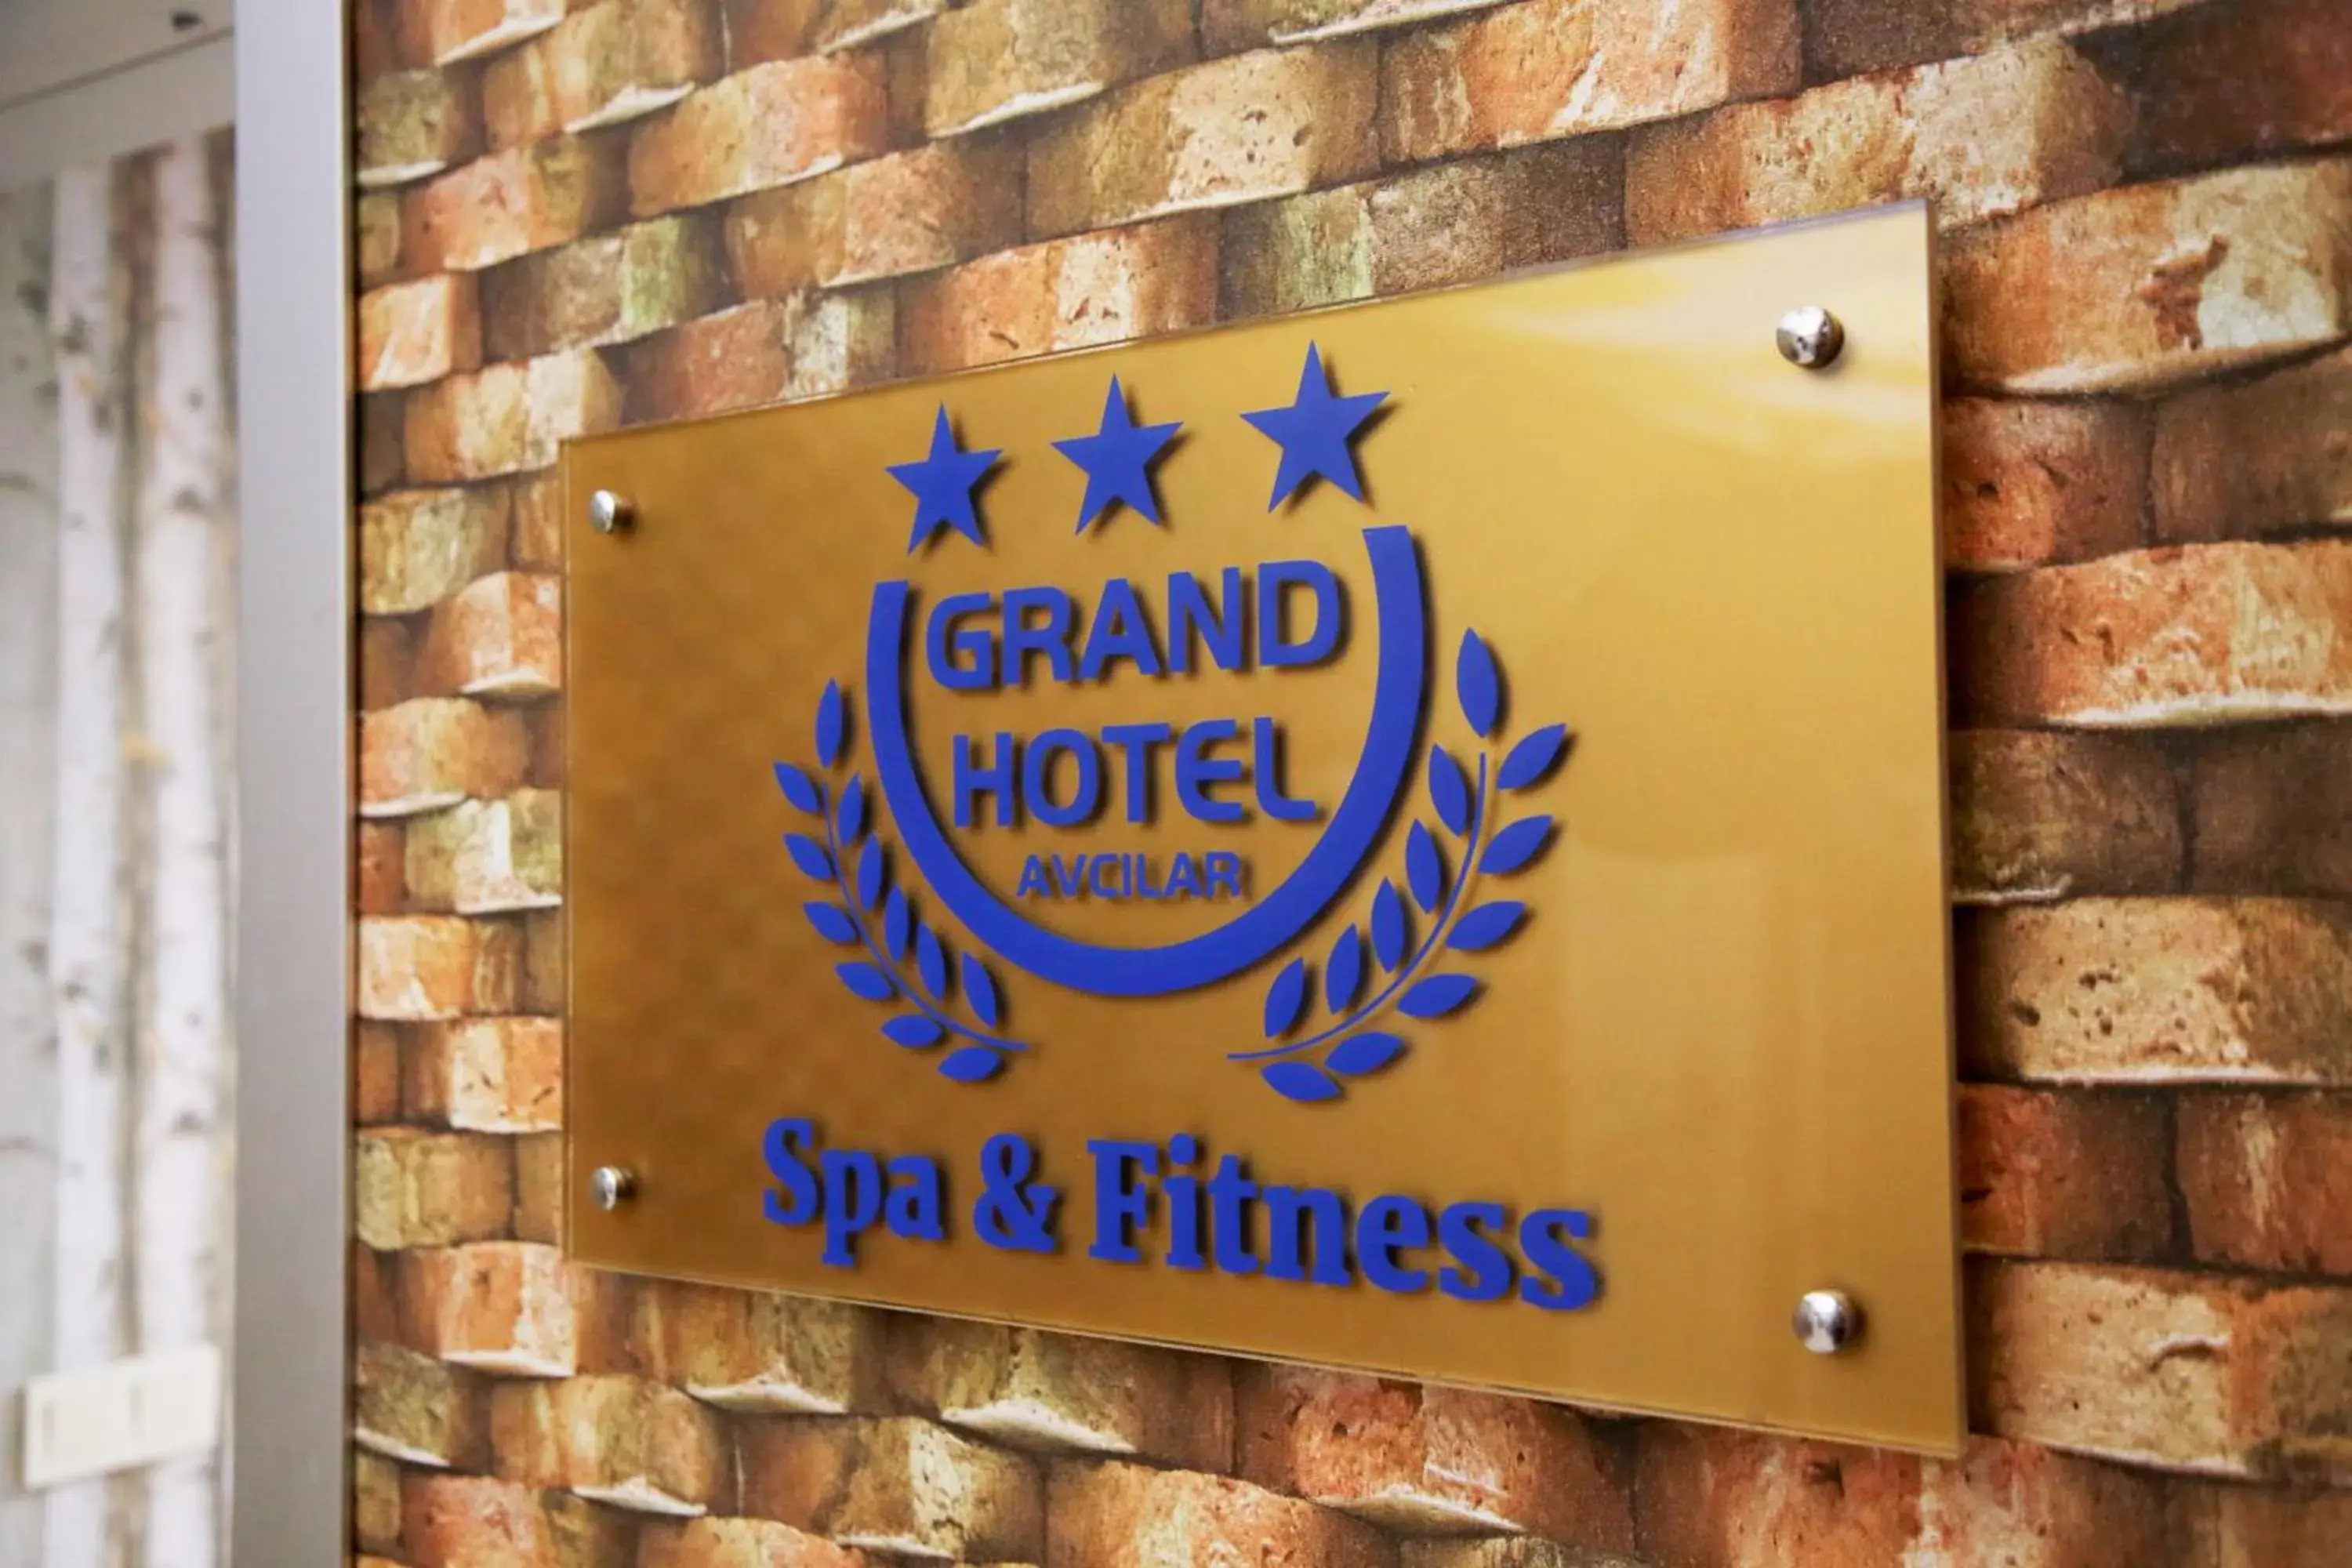 Activities in Grand Hotel Avcilar